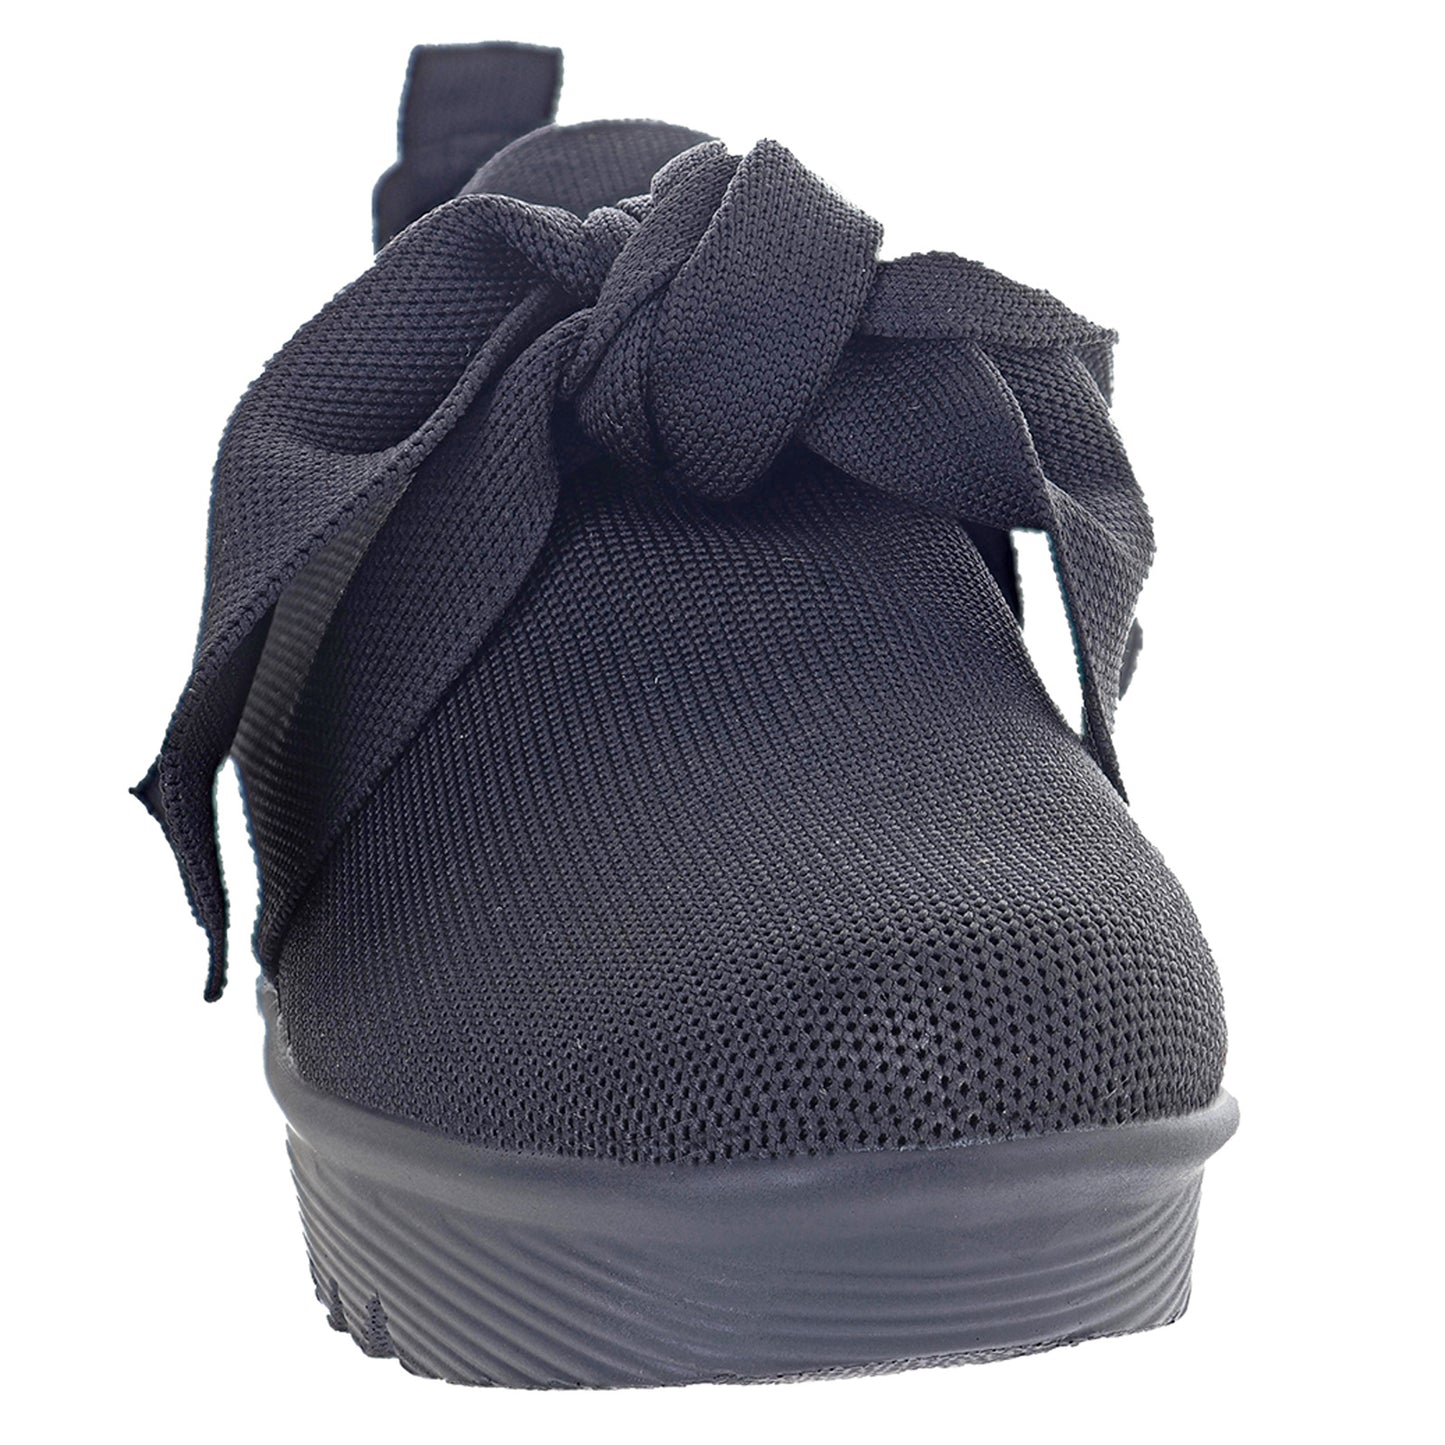 Peltz Shoes  Women's Bernie Mev Lulia Serenity Slip-On BLACK LULIA SER BK